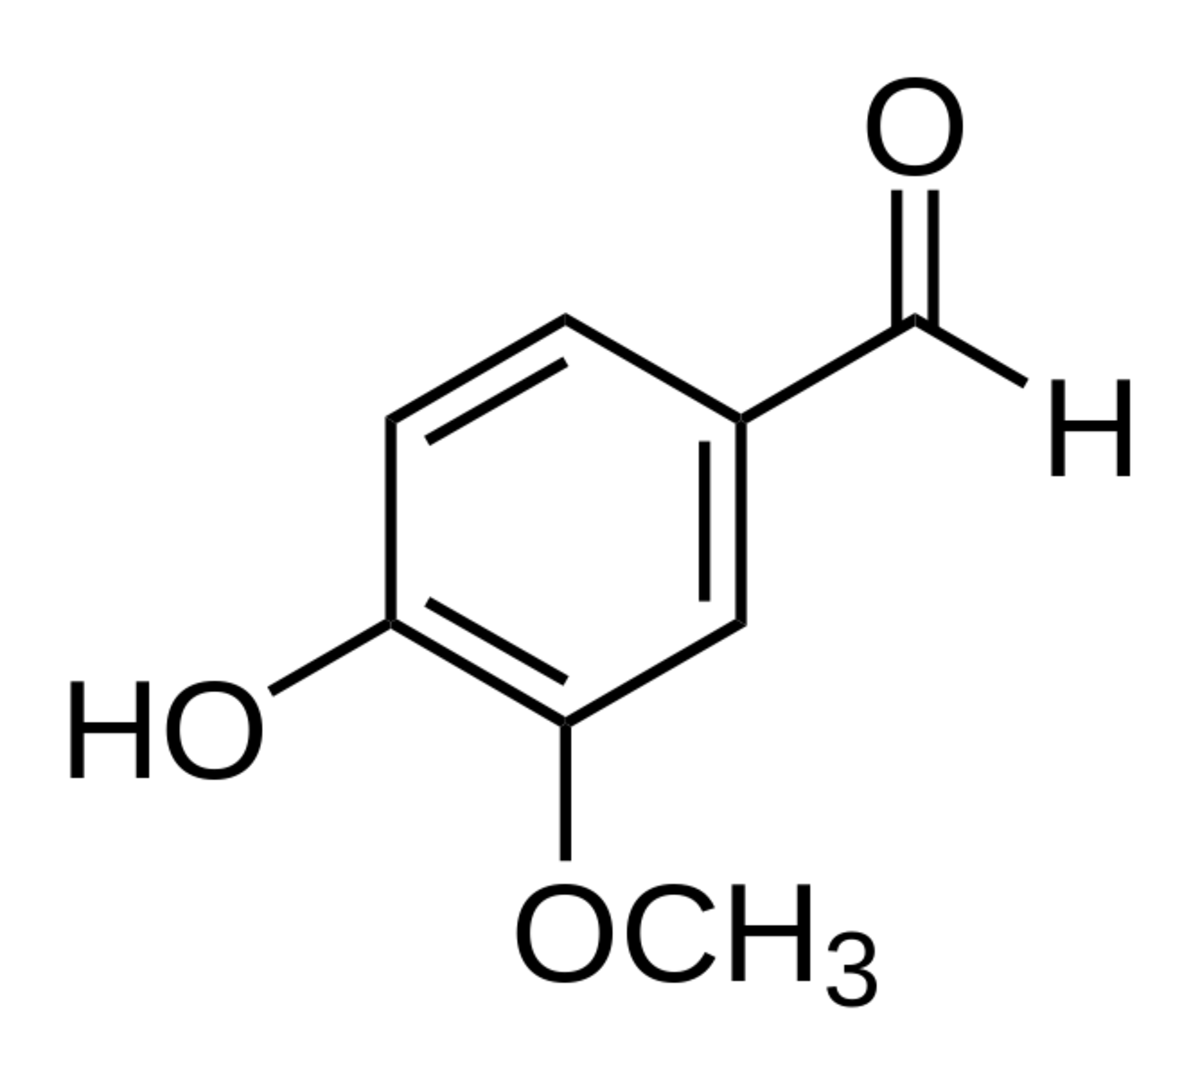 Molecular structure of vanillin.